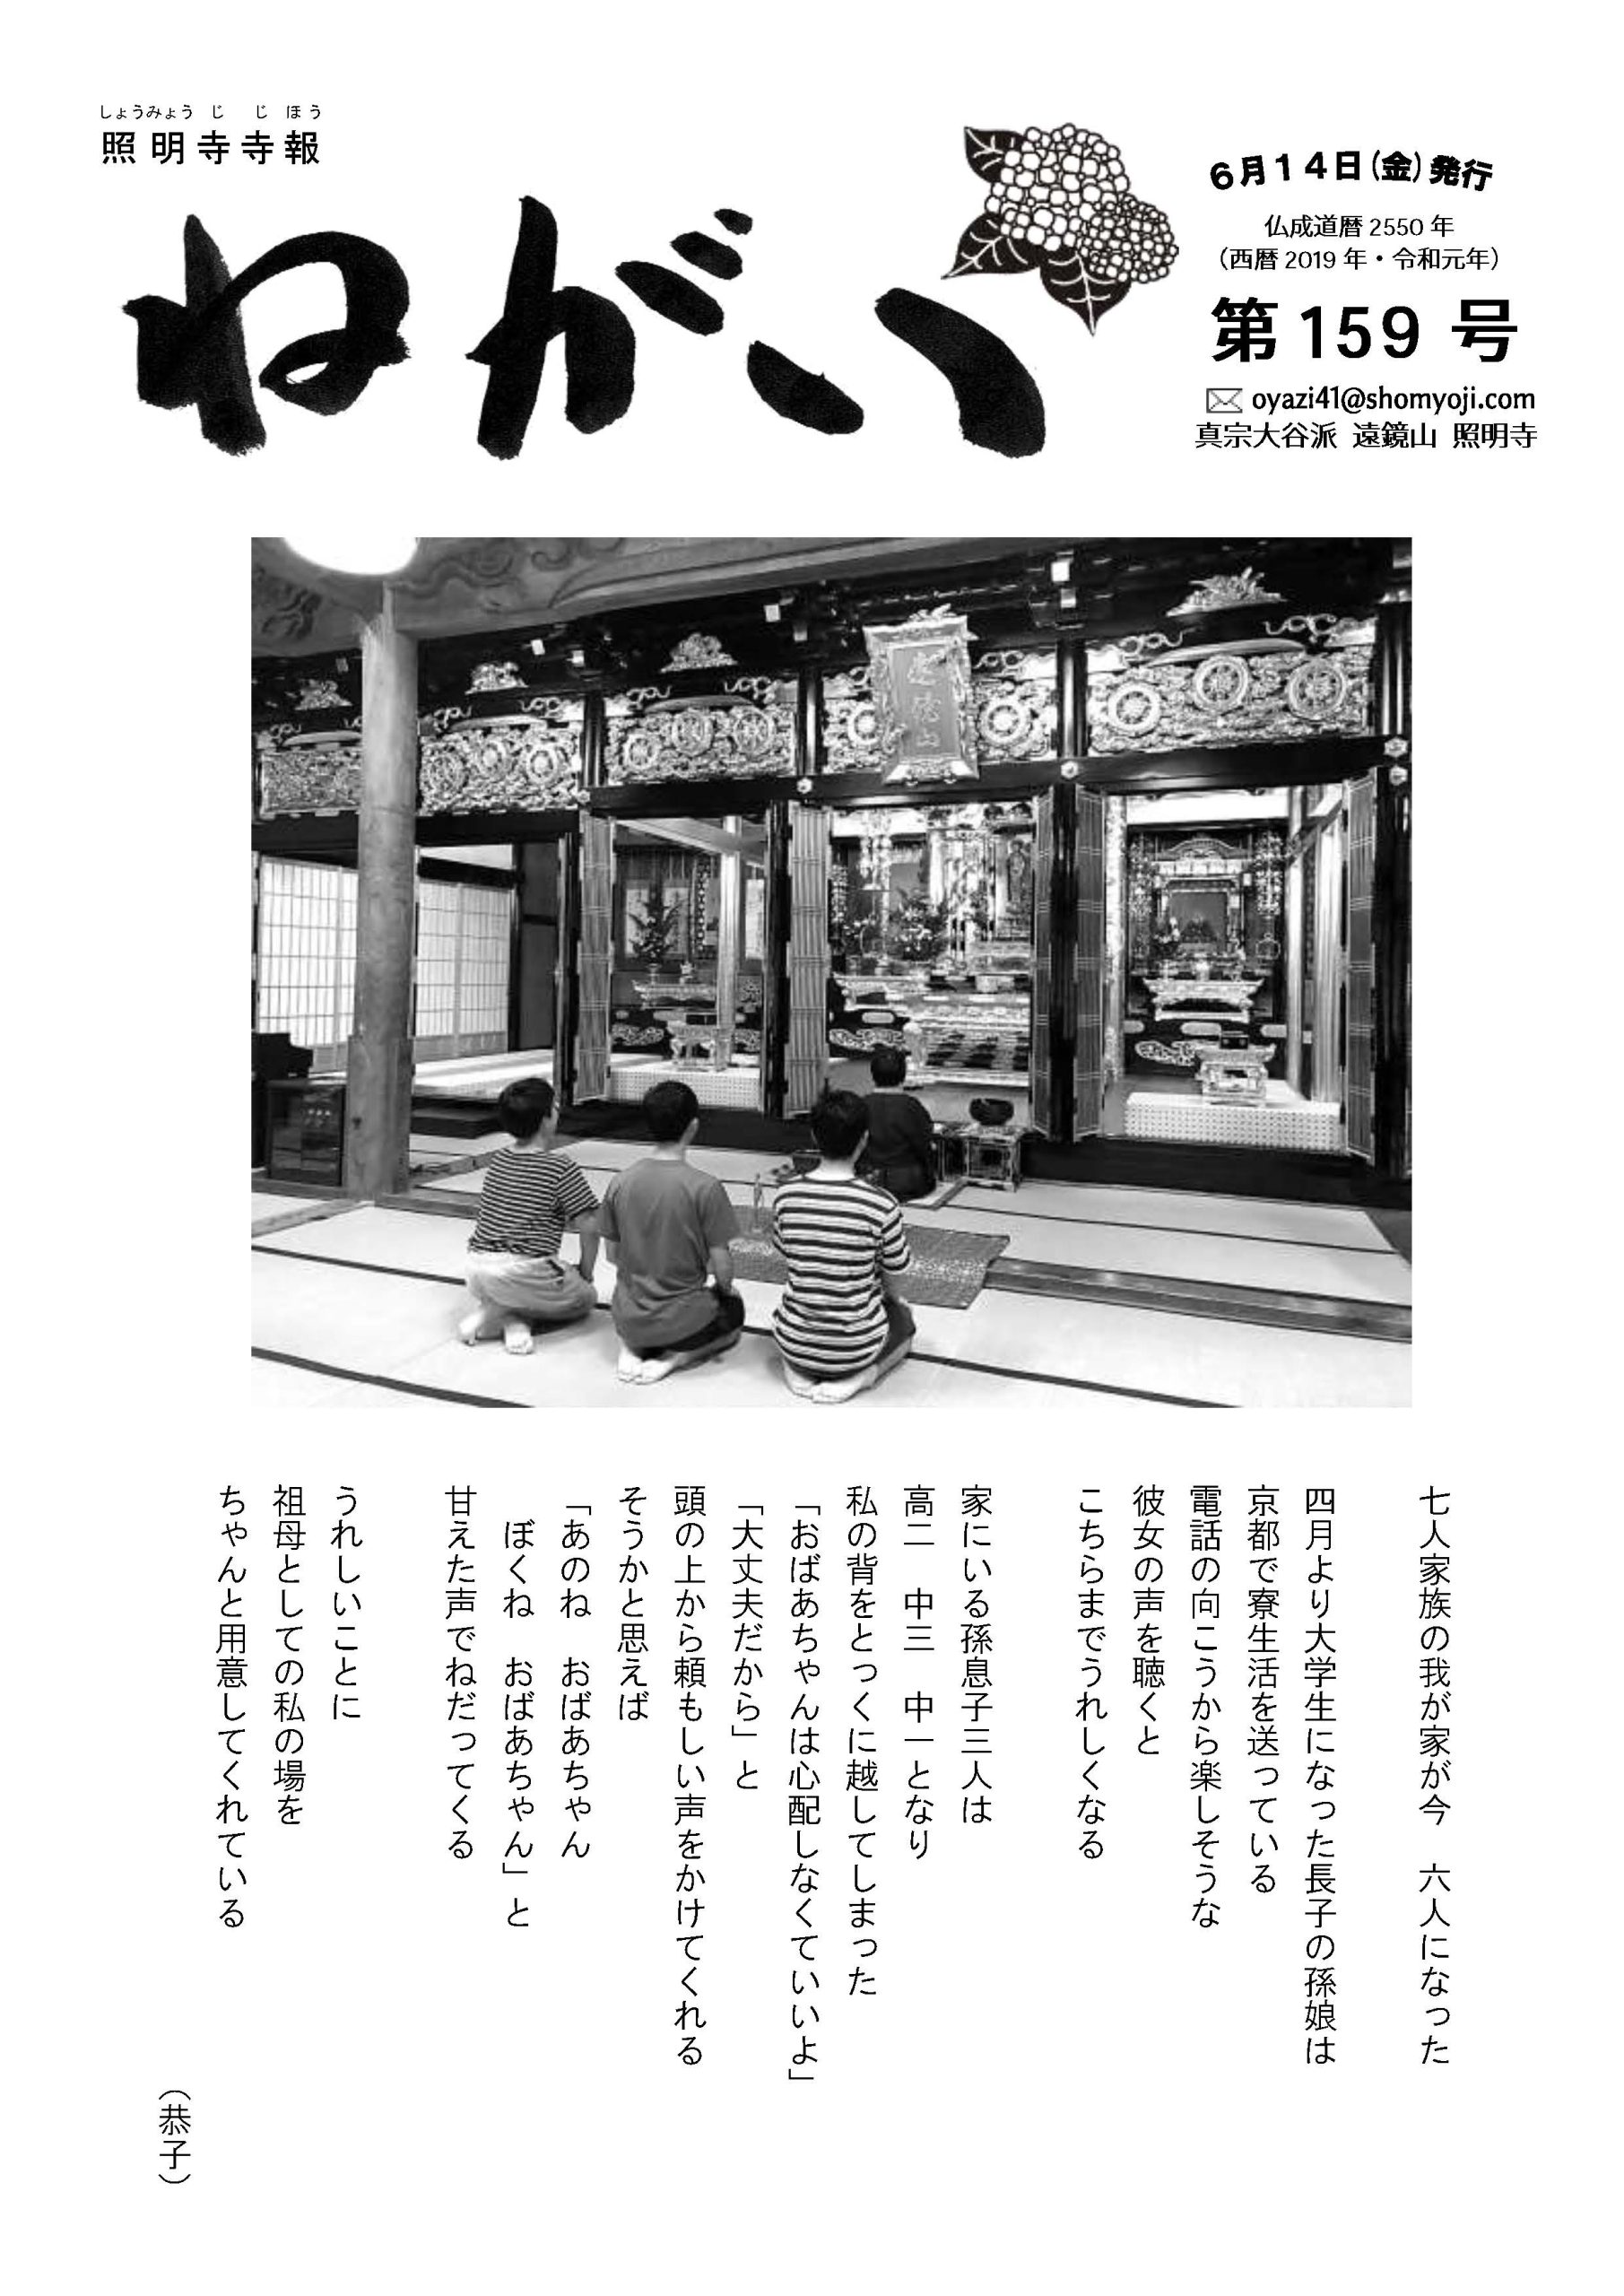 寺報「願い」 第159号 2019年6月14日発行